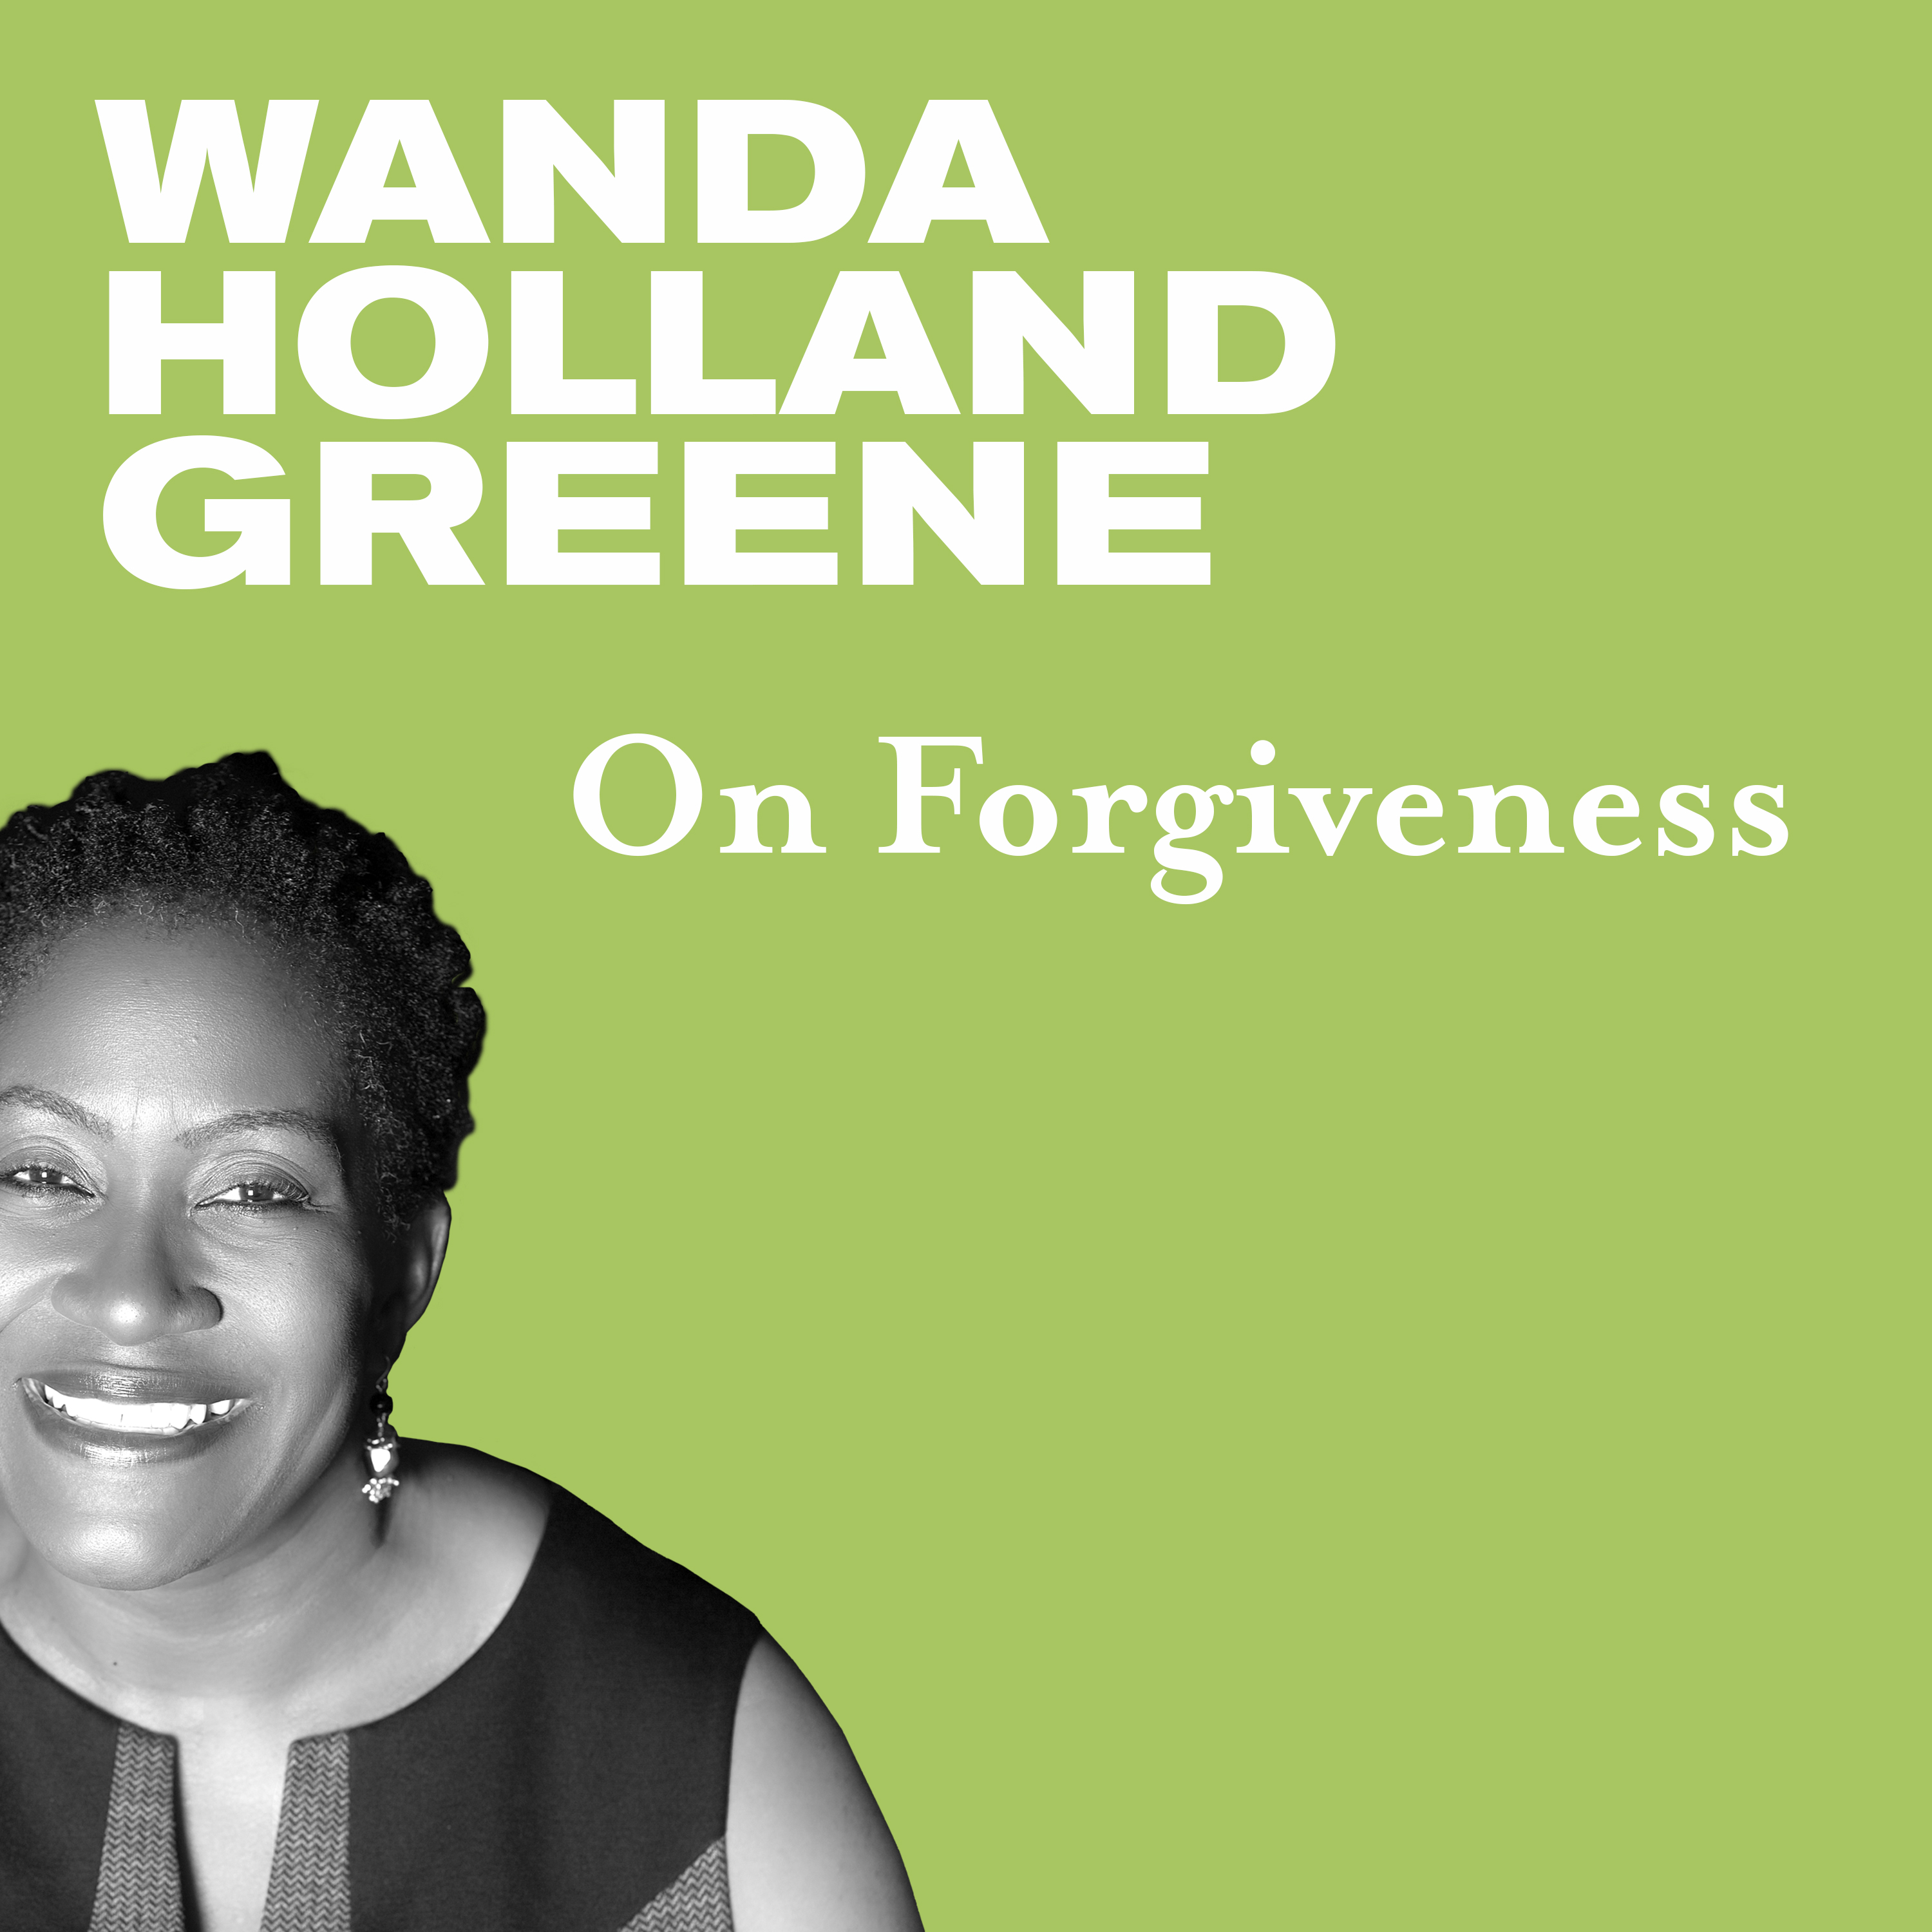 Three Stories of Extraordinary Forgiveness with Wanda Holland Greene